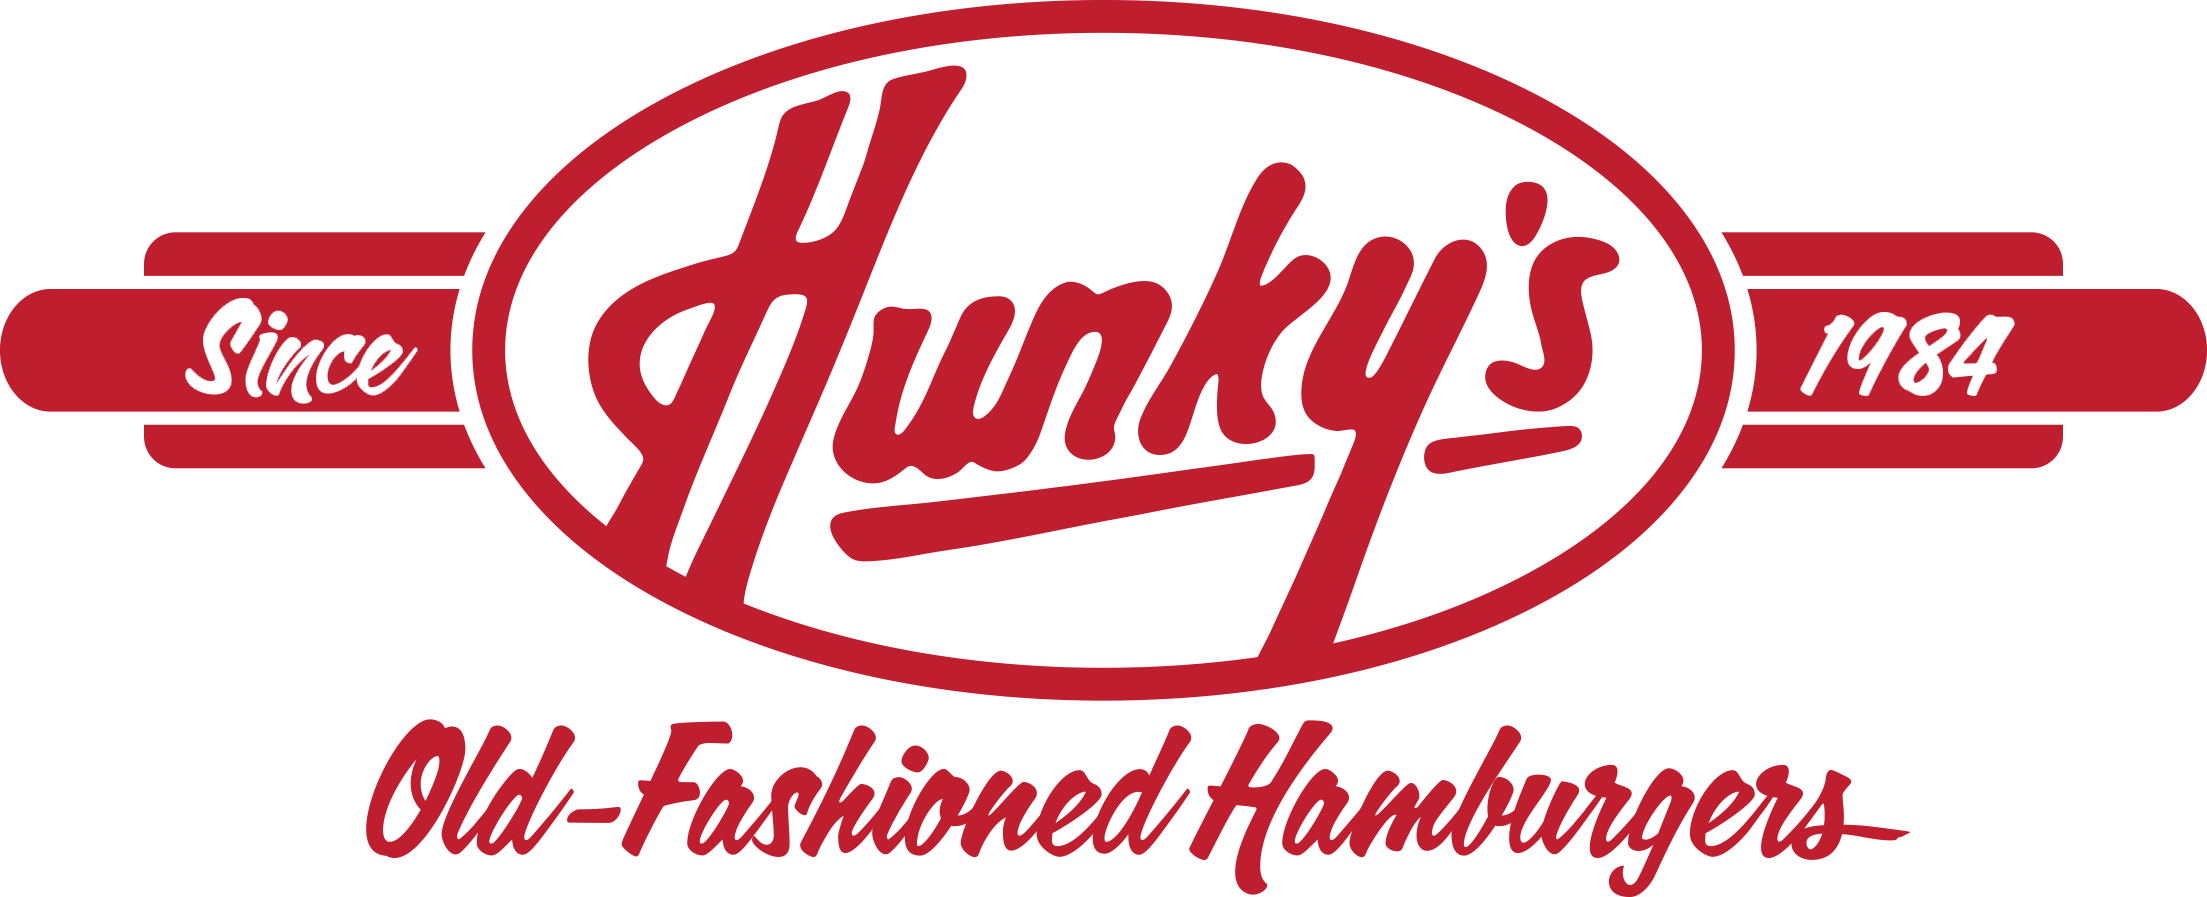 Hunkys Restaurant – Old-Fashioned Hamburgers